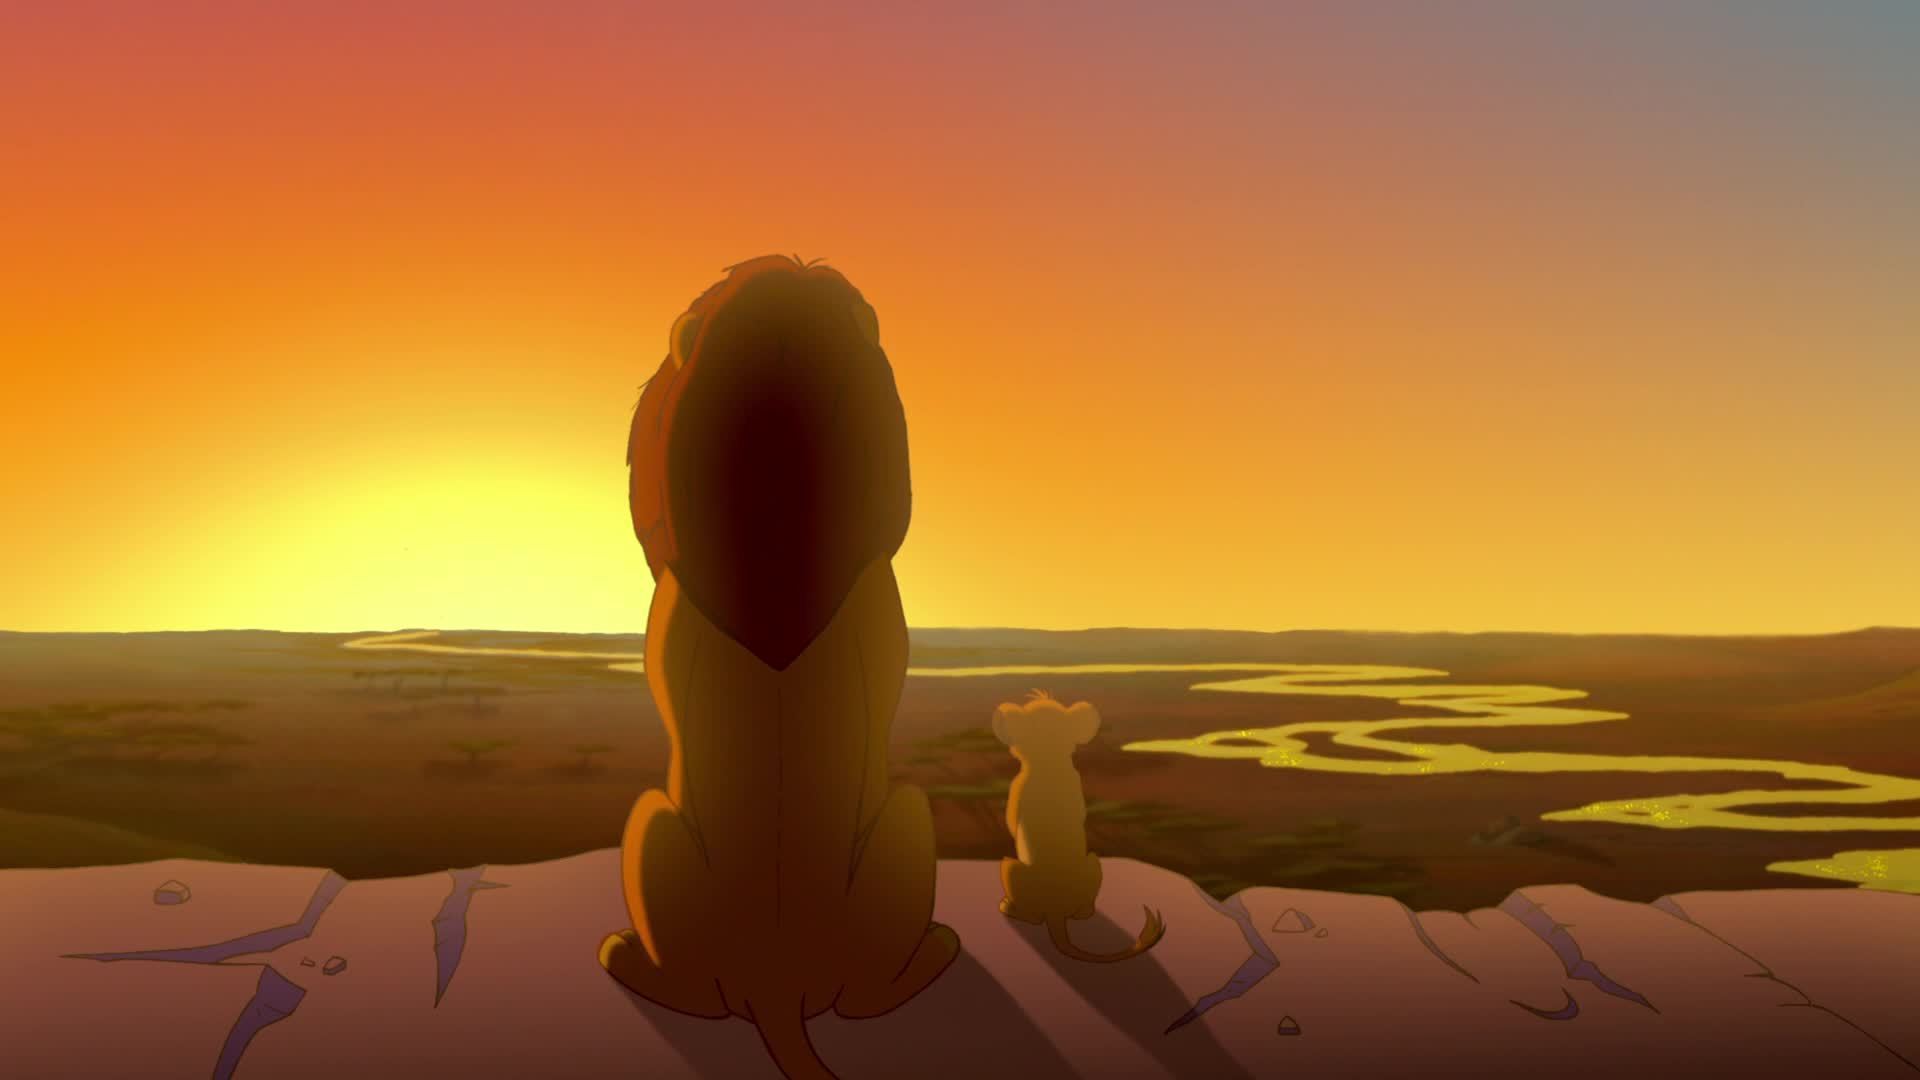 The Lion King | Disney Movies